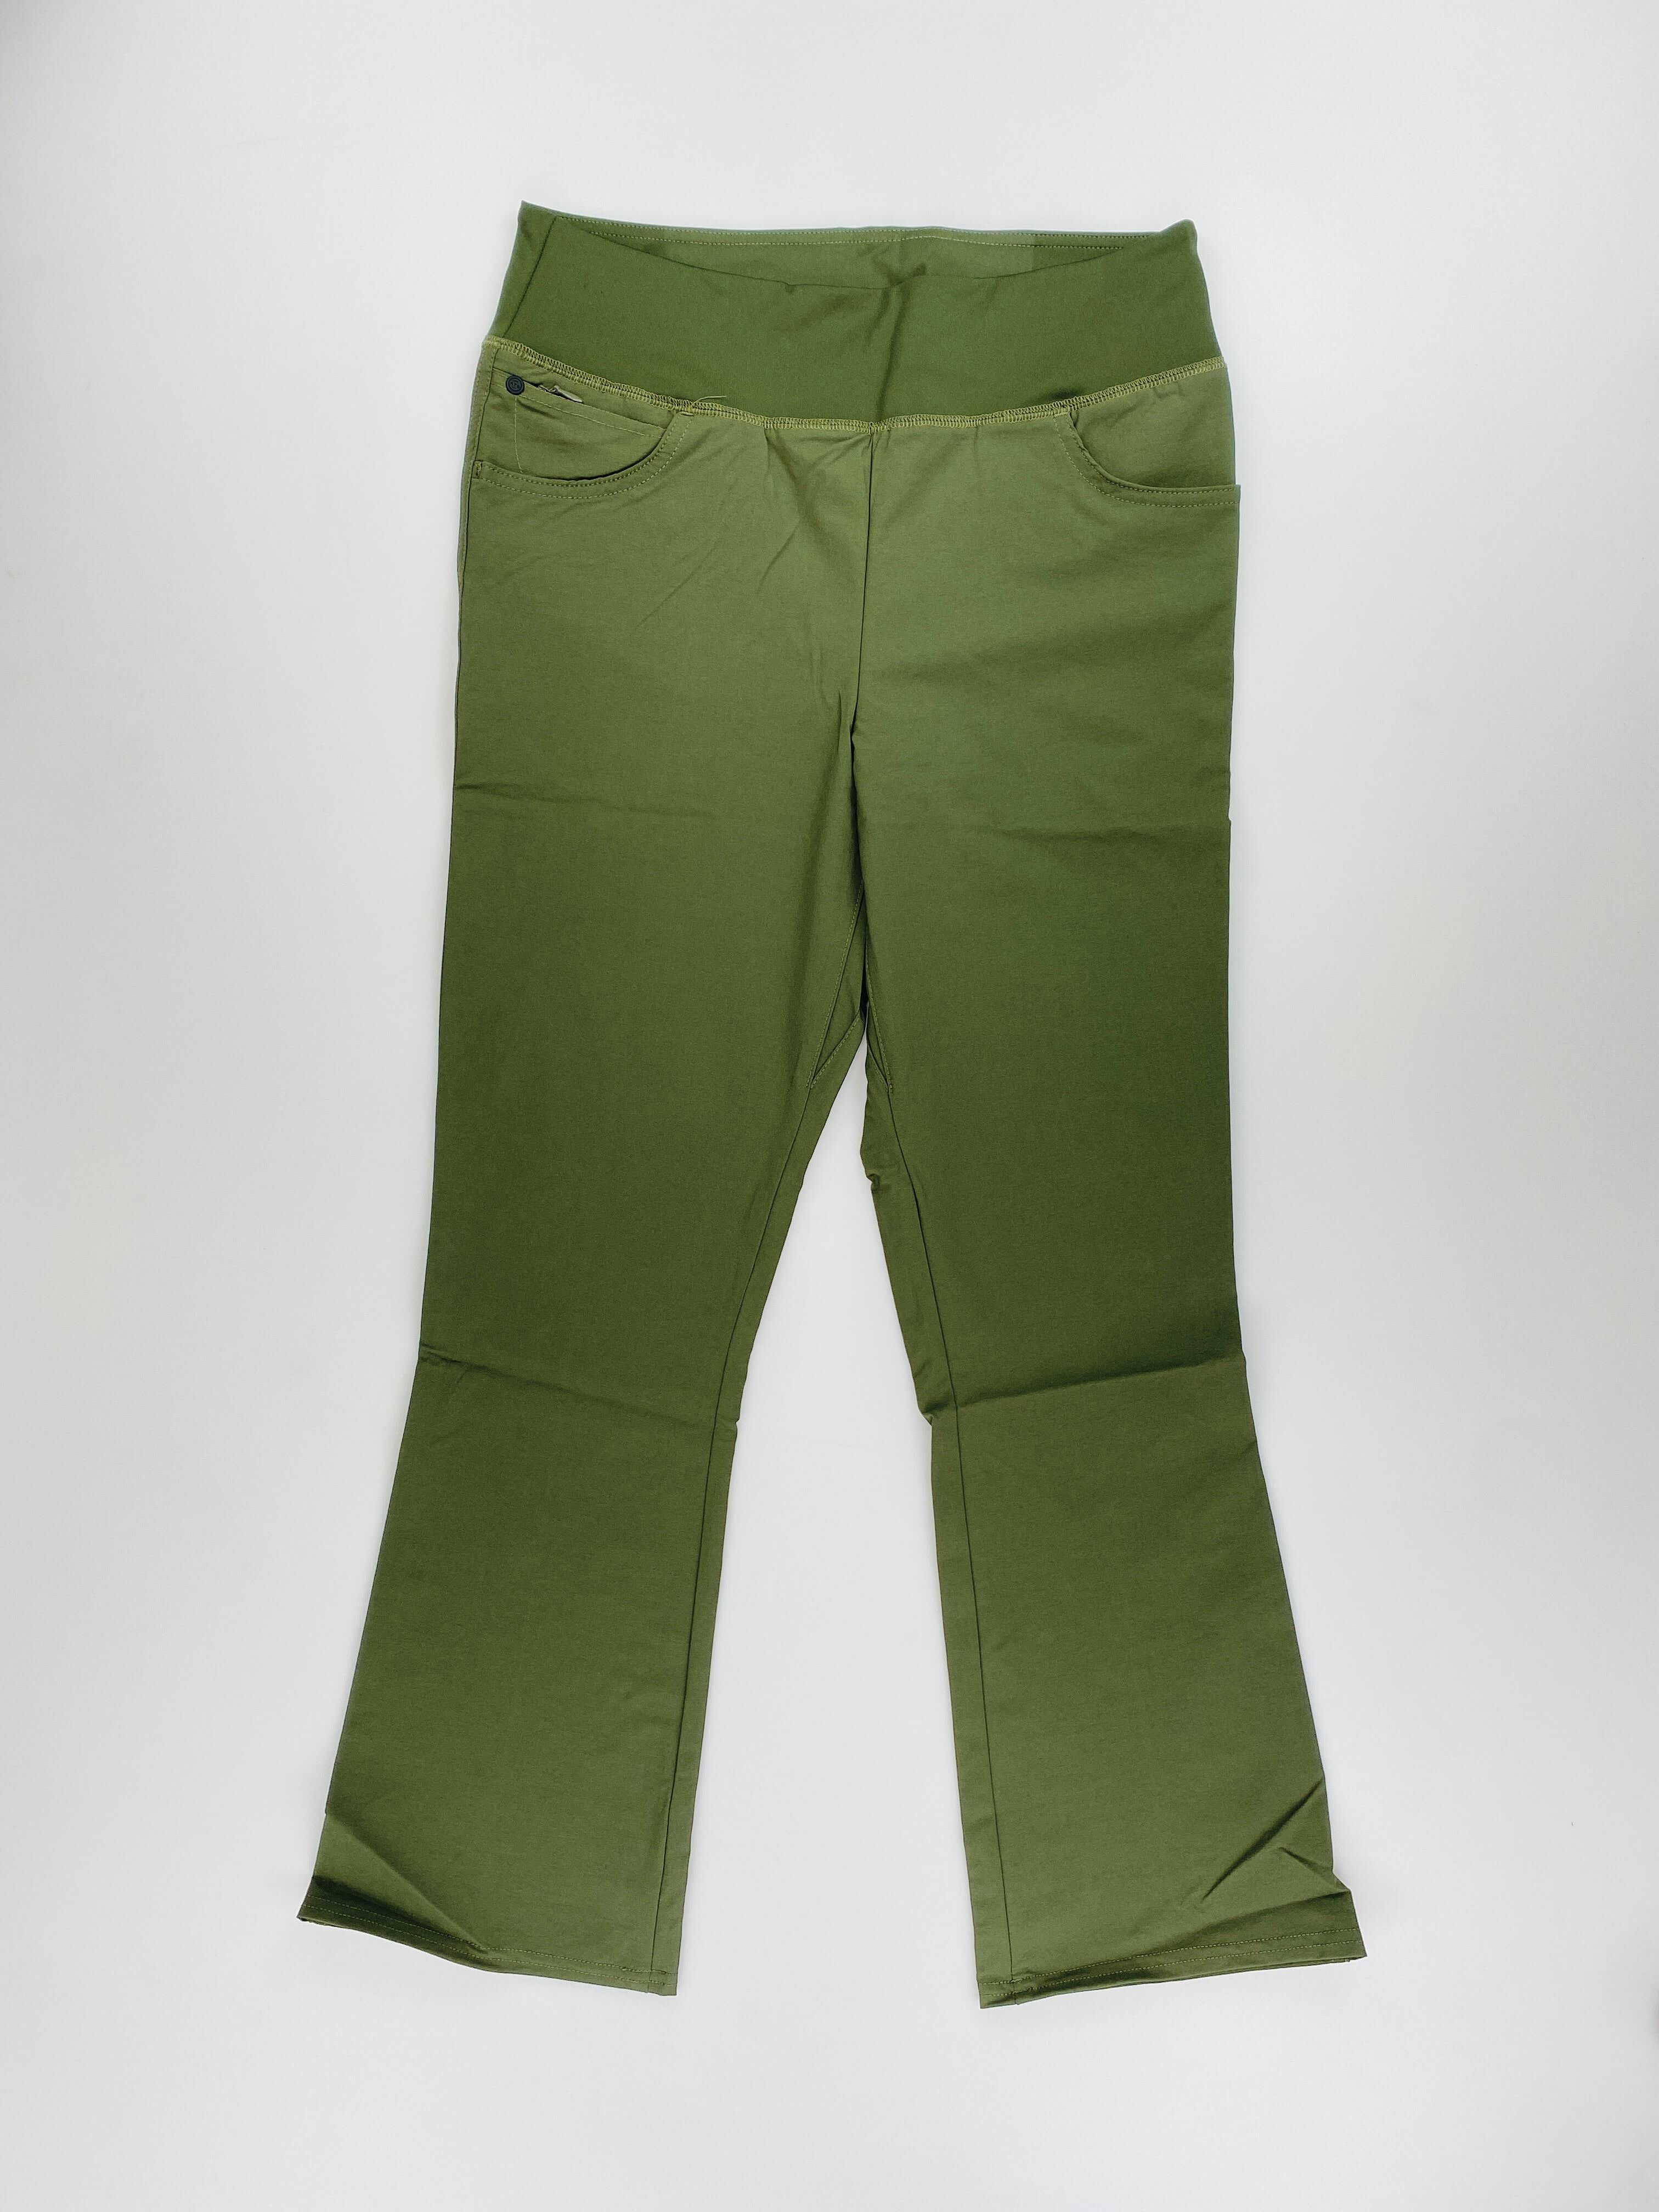 Wrangler Fwds Kick Flare - Second Hand Walking trousers - Women's - Olive green - US 28 | Hardloop